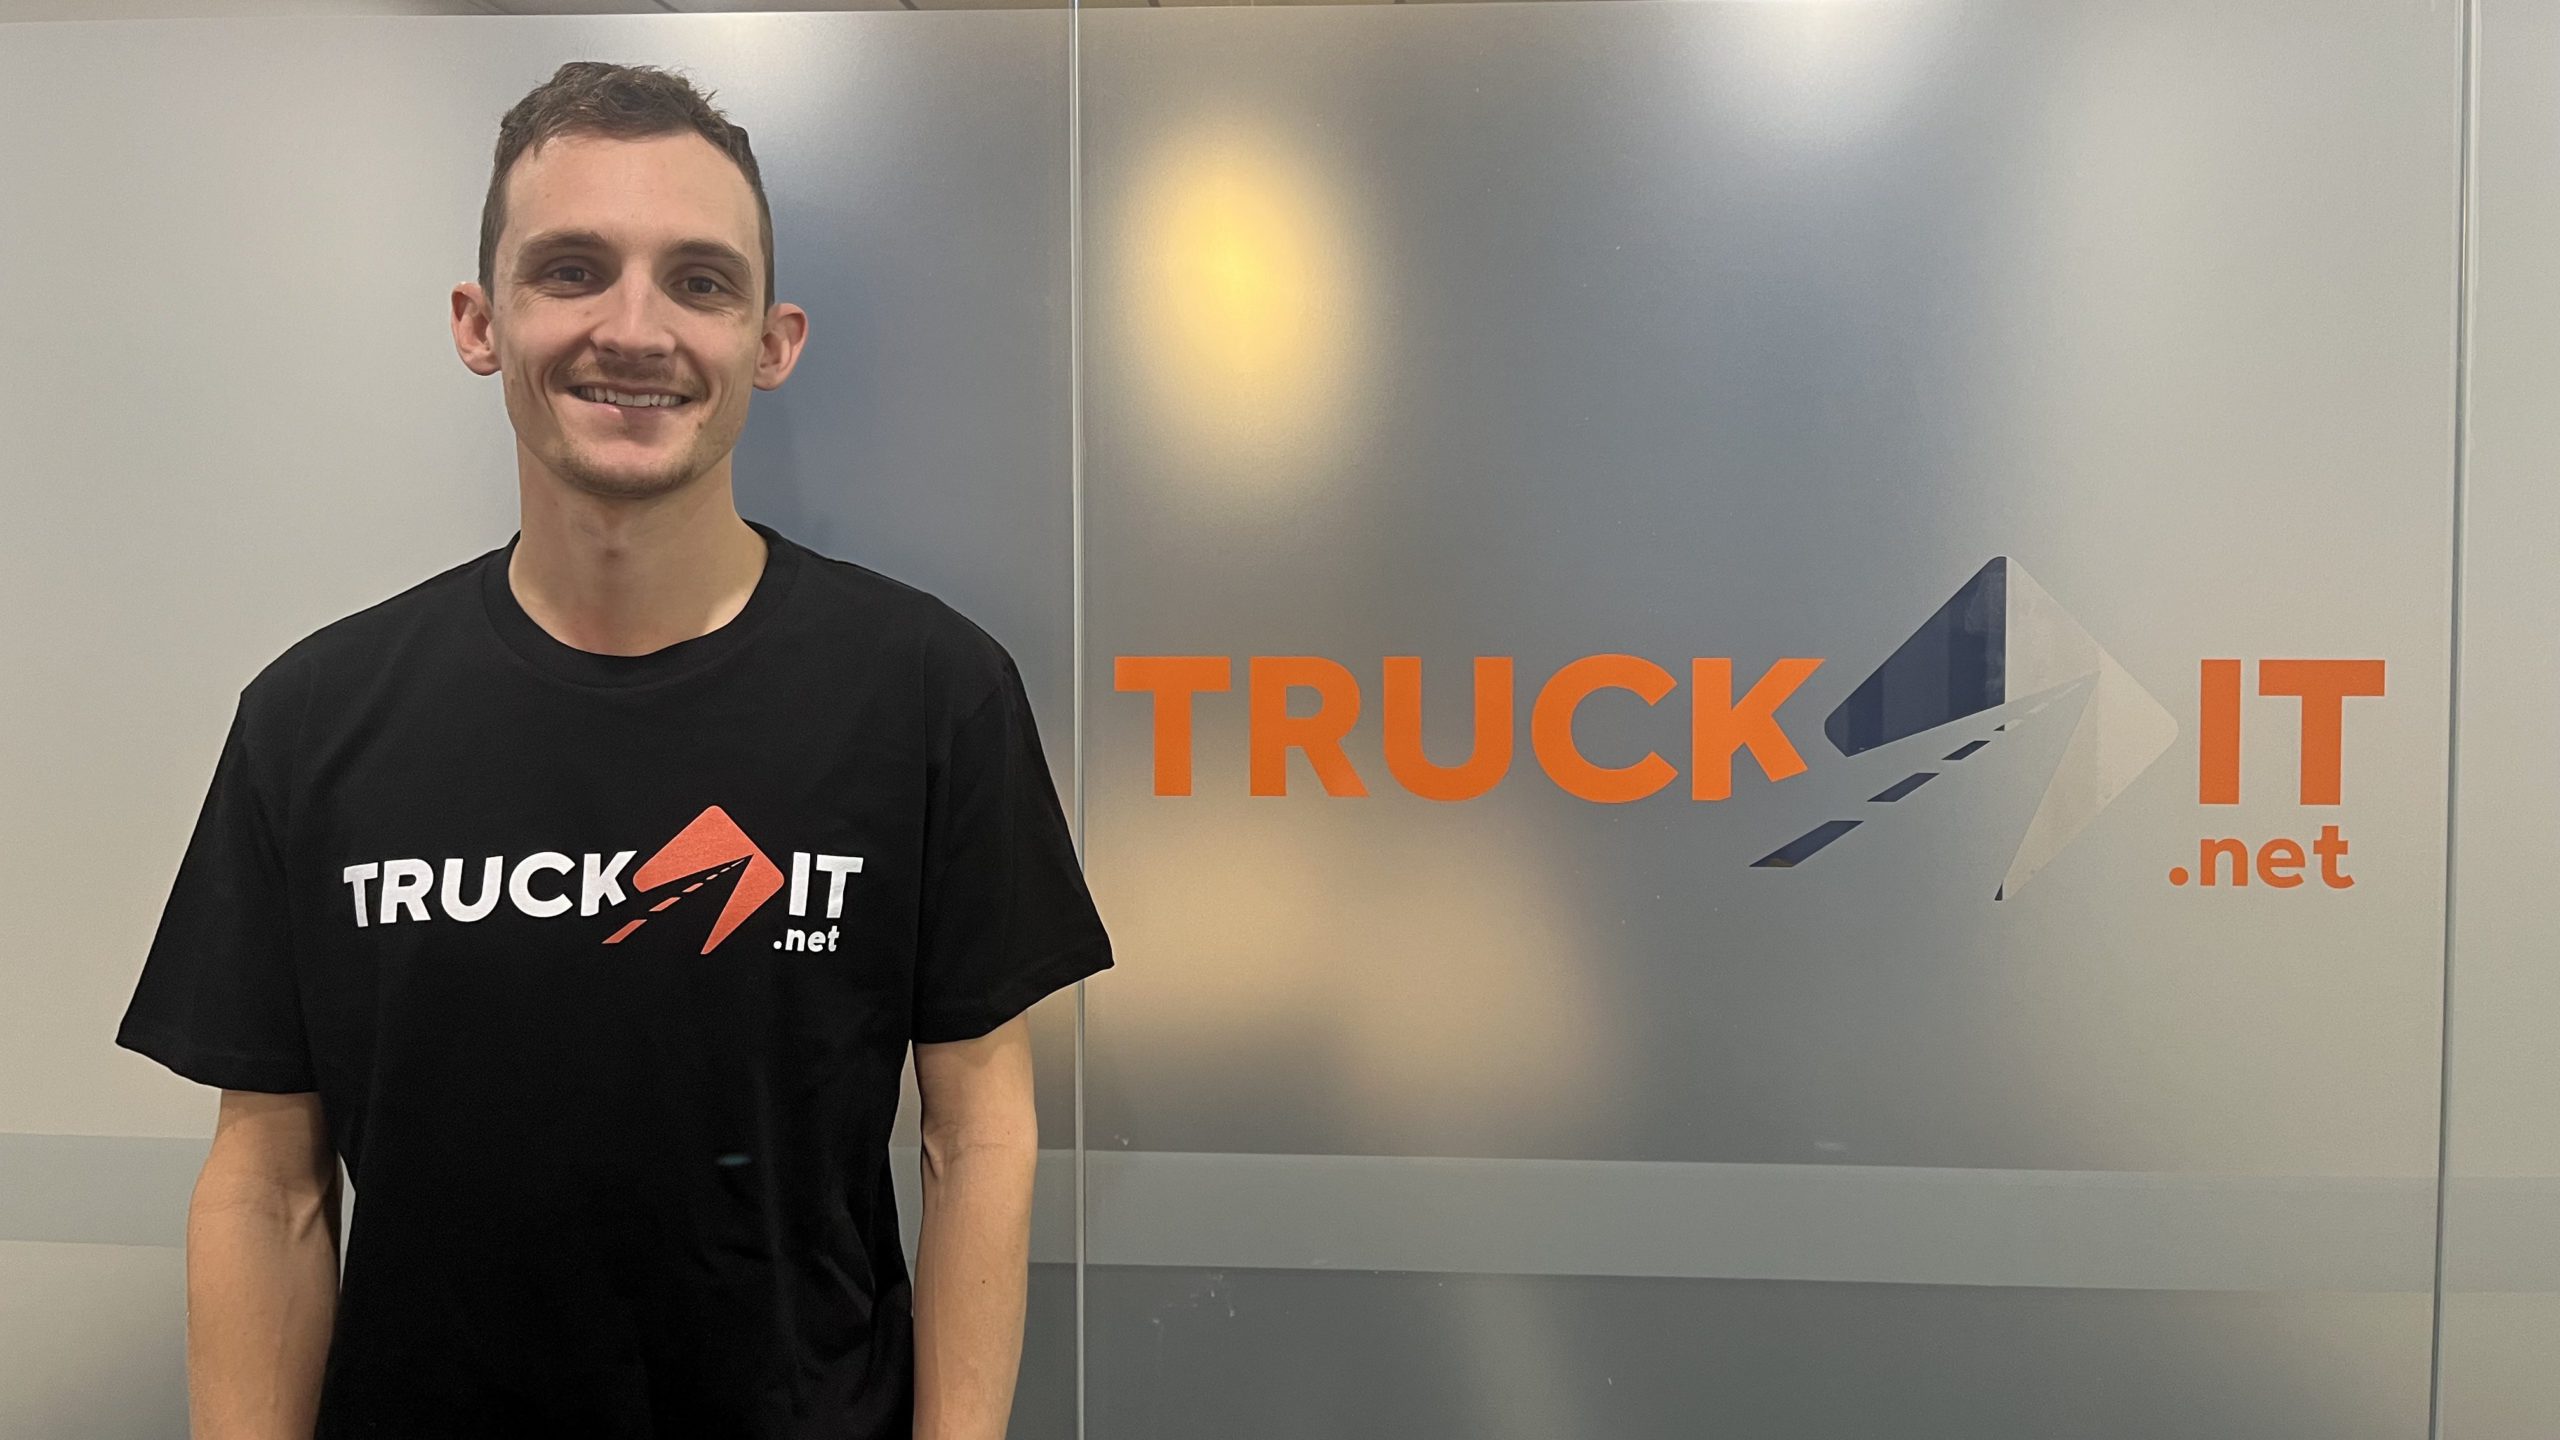 Sam McCallum Truckit.net Customer Success and Onboarding